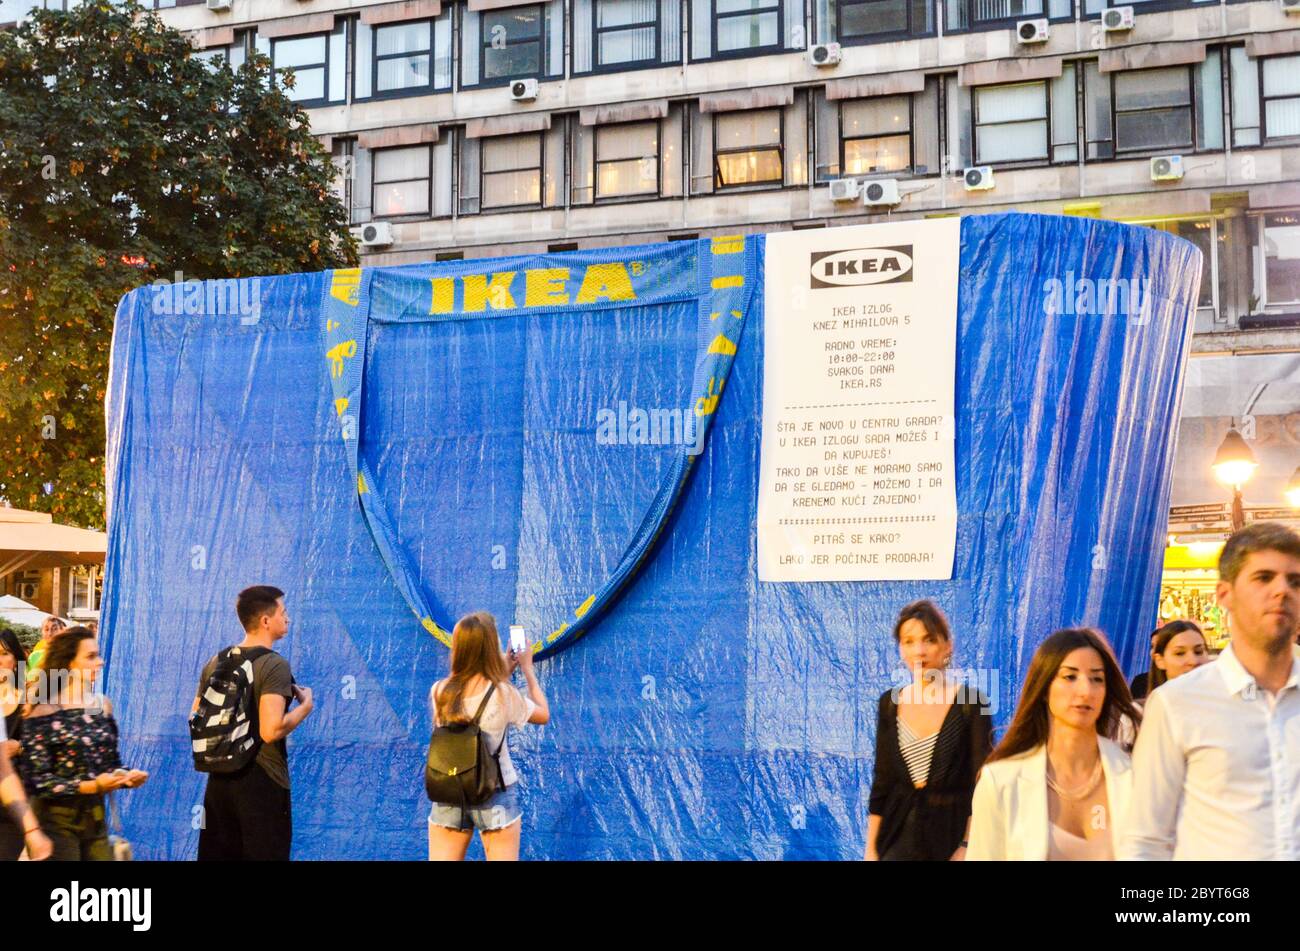 Advertising stunt: Giant Ikea structure in Belgrade (Beograd), Serbia Stock Photo